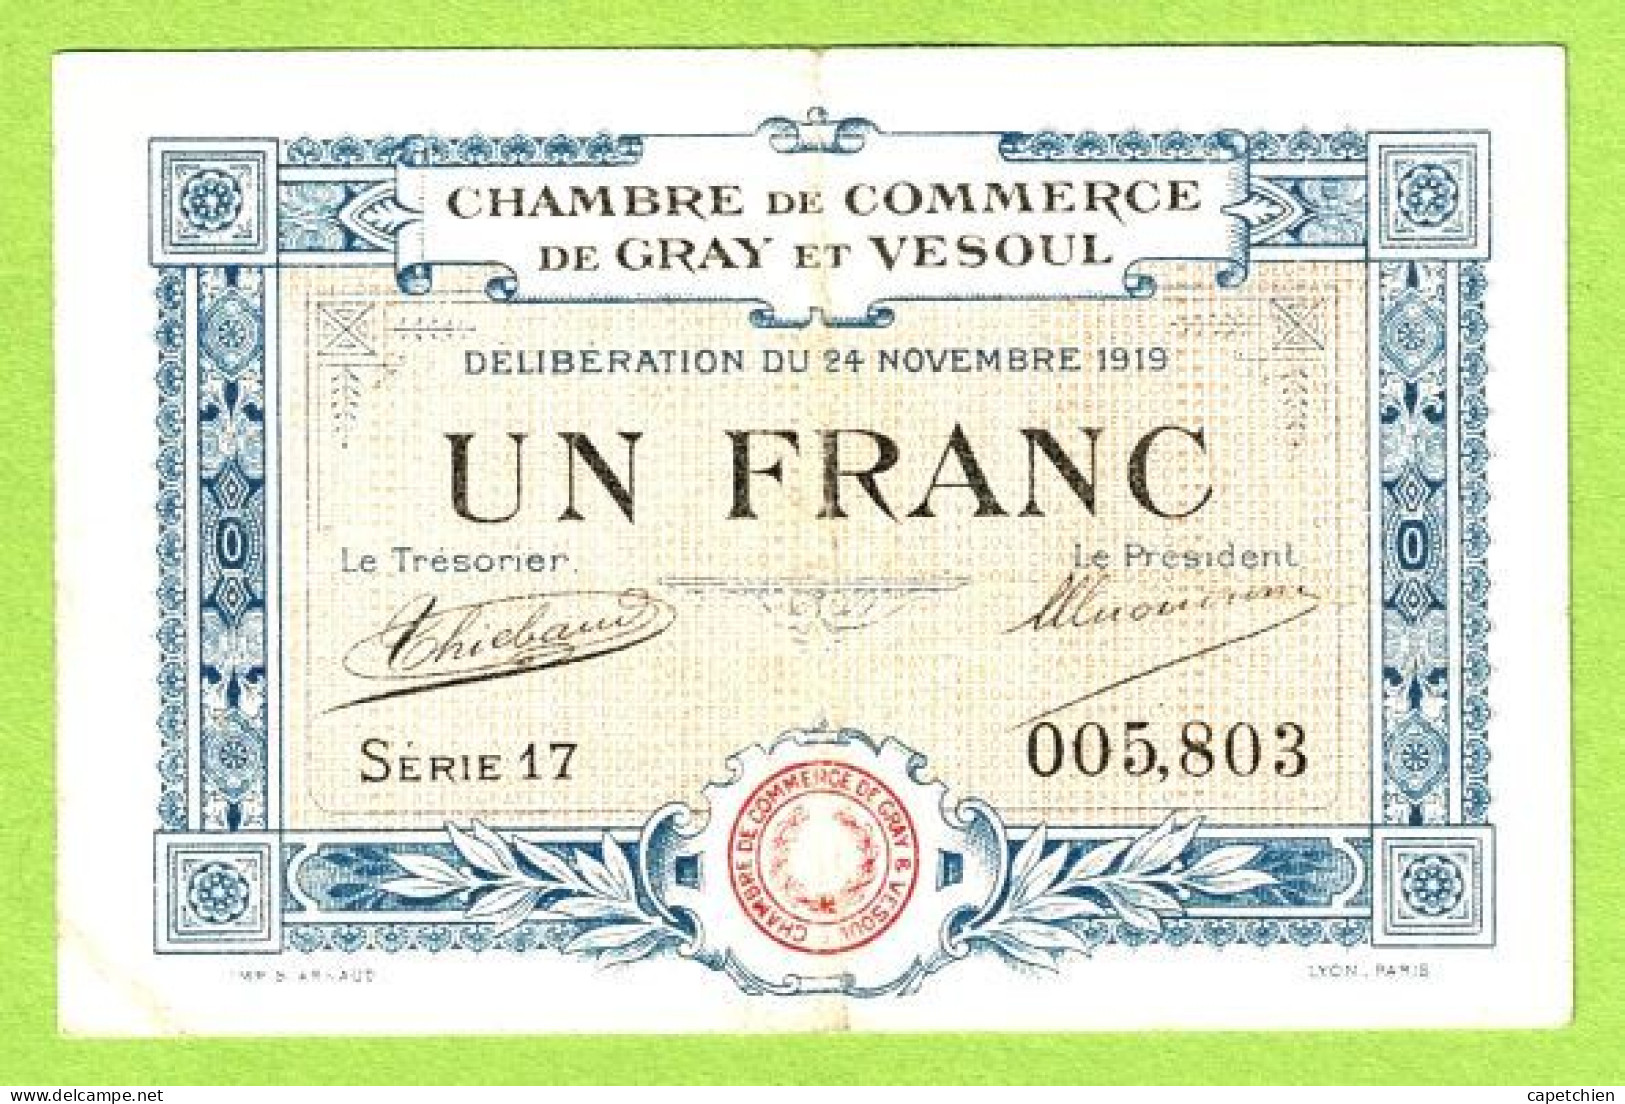 FRANCE / CHAMBRE De COMMERCE / GRAY -  VESOUL / 1 FRANC / 24 NOVEMBRE 1919 / SERIE 17 / N° 005803 - Handelskammer